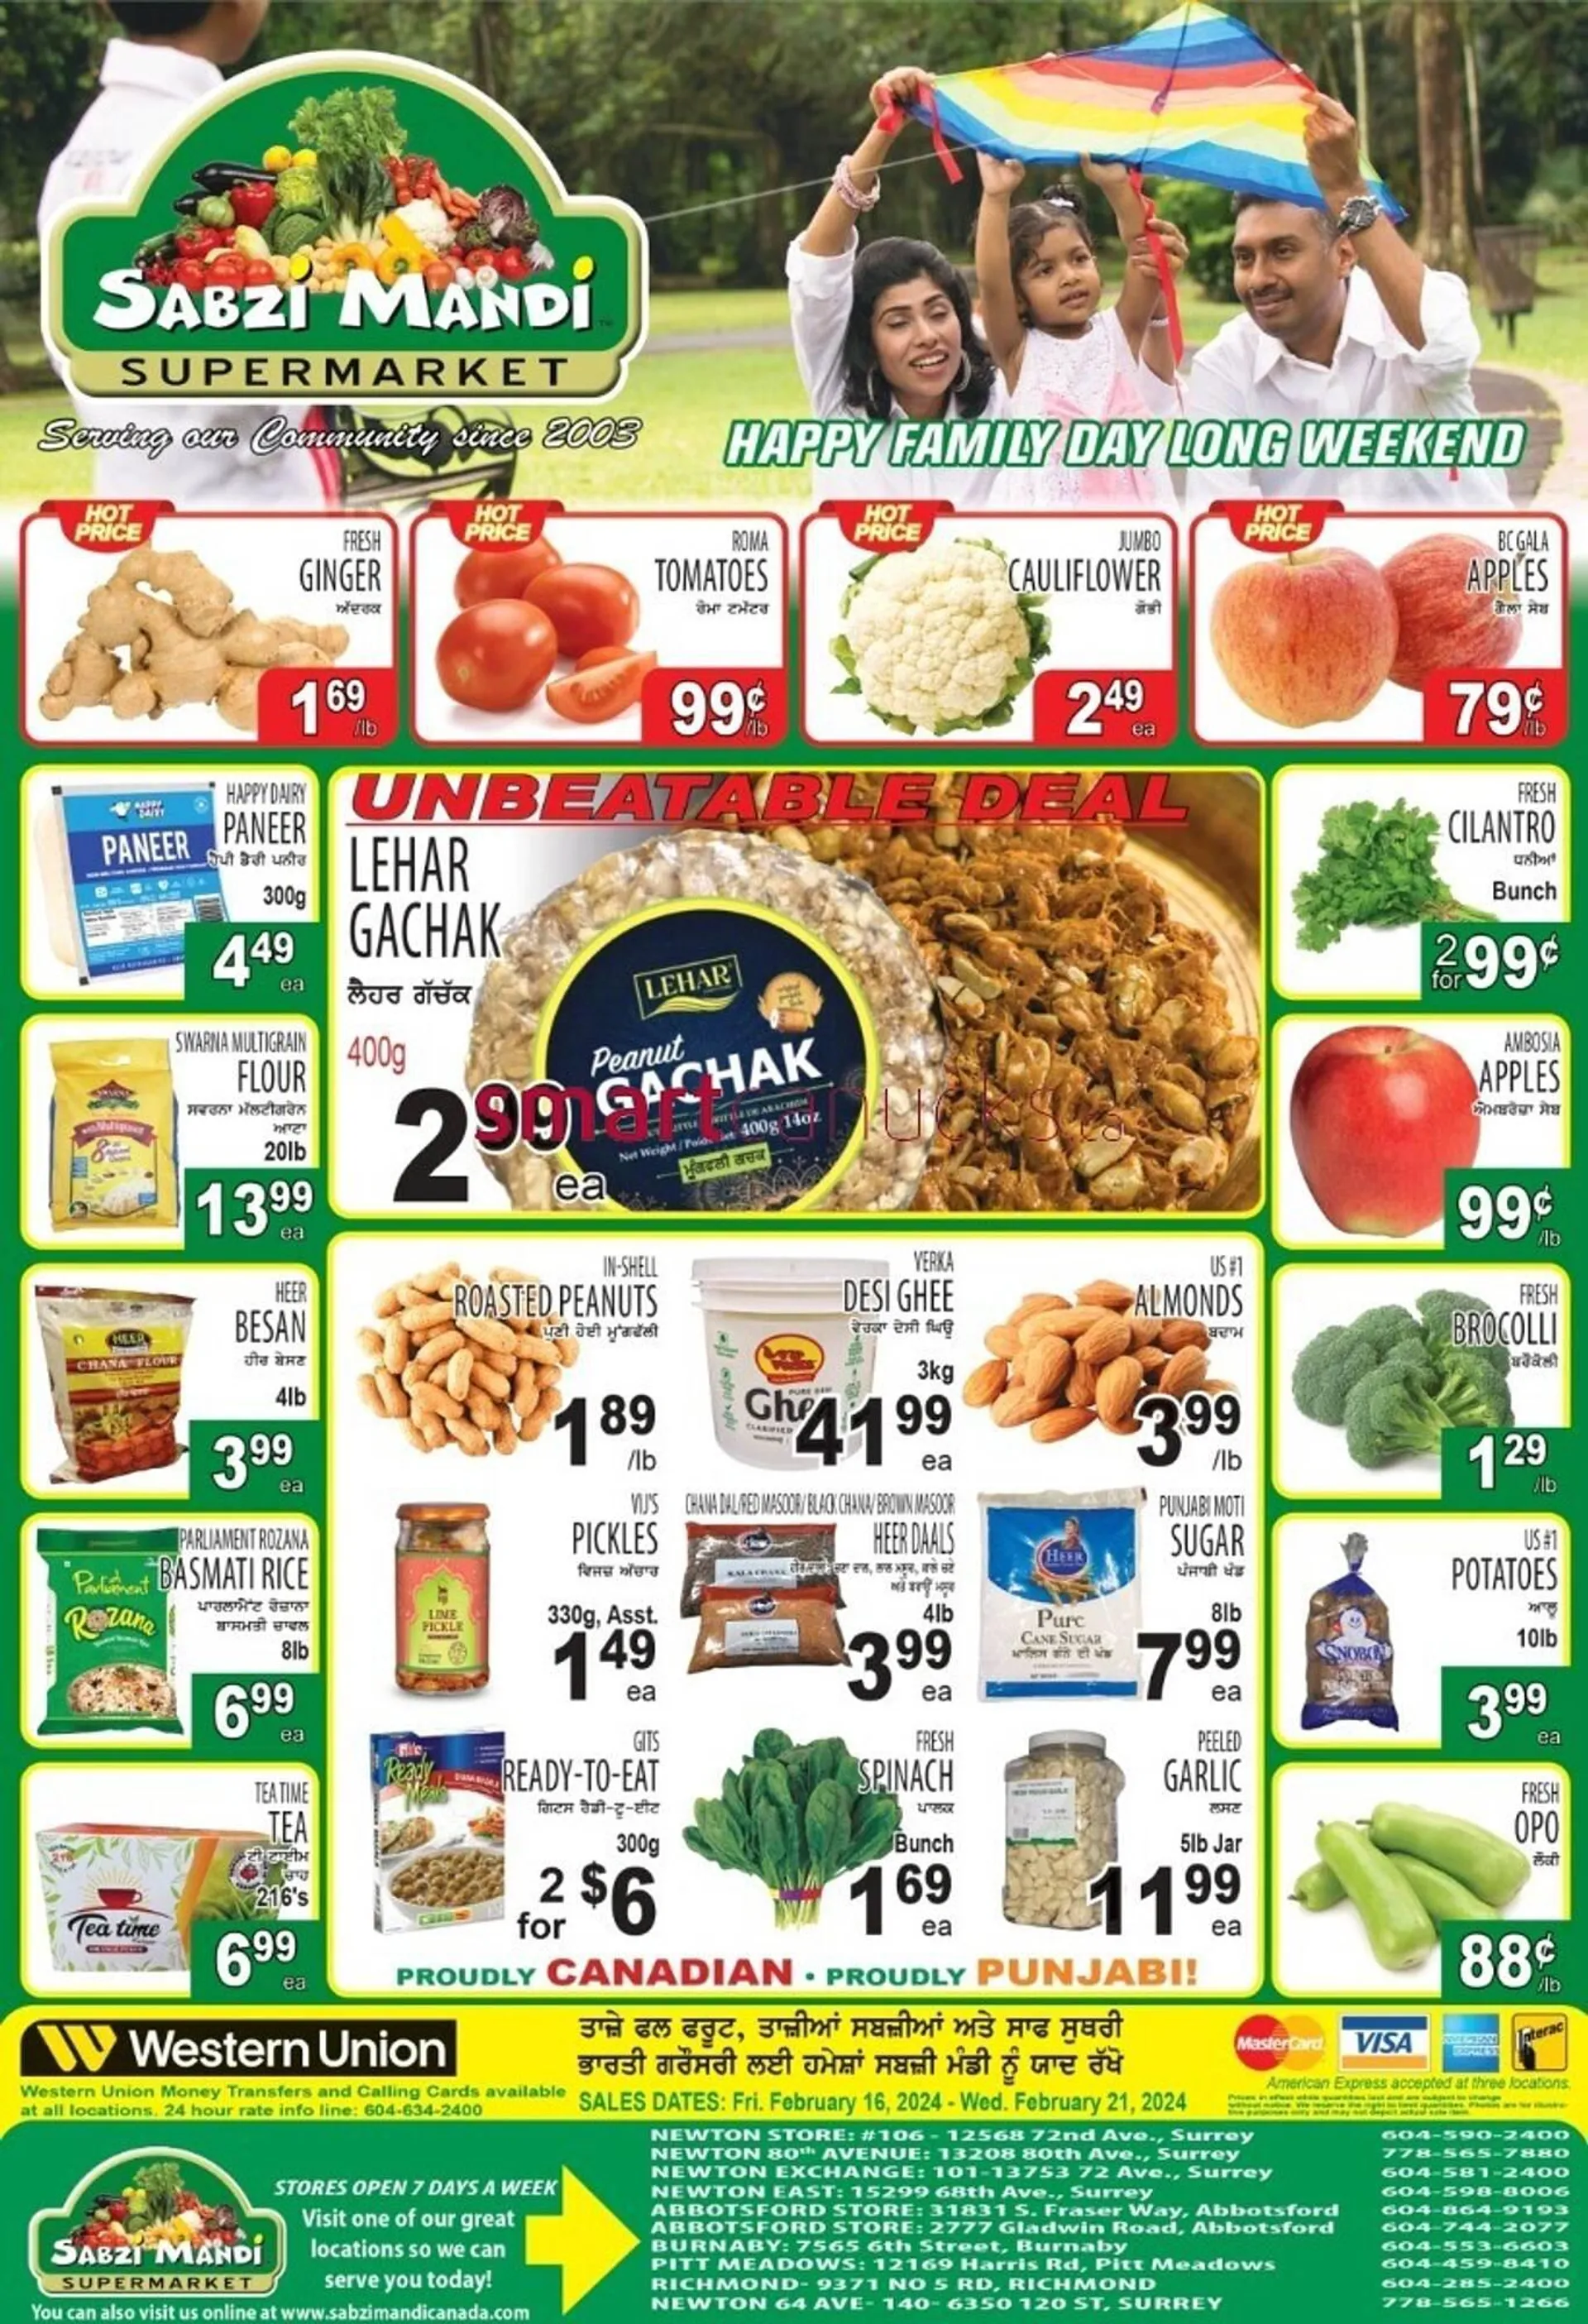 Sabzi Mandi Supermarket flyer from February 16 to February 22 2024 - flyer page 